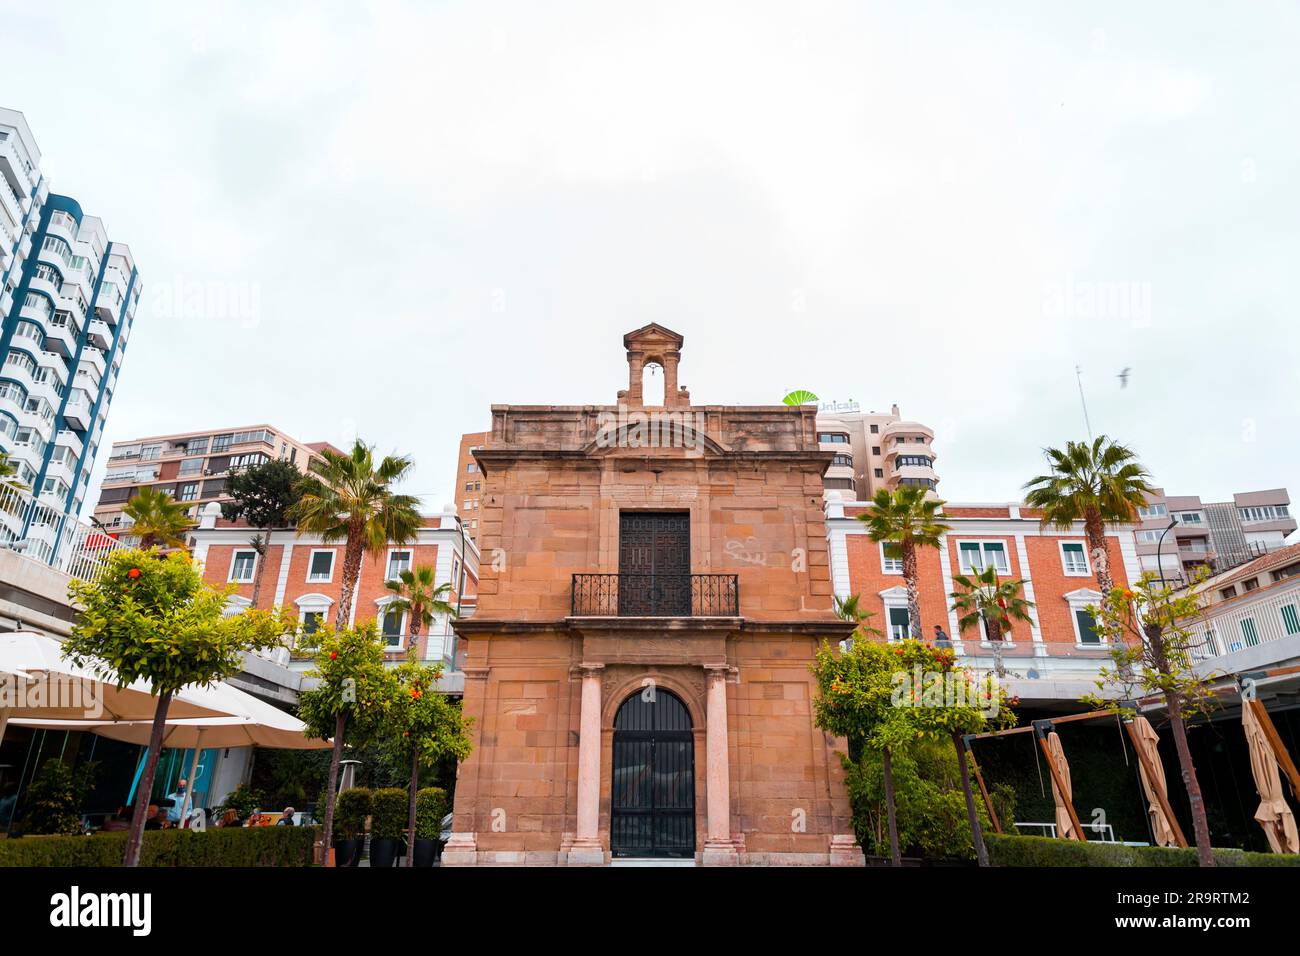 Malaga, Spanien - 27. FEBRUAR 2022: Die Kapelle des Hafens von Malaga, La capilla del puerto de Malaga. Stockfoto